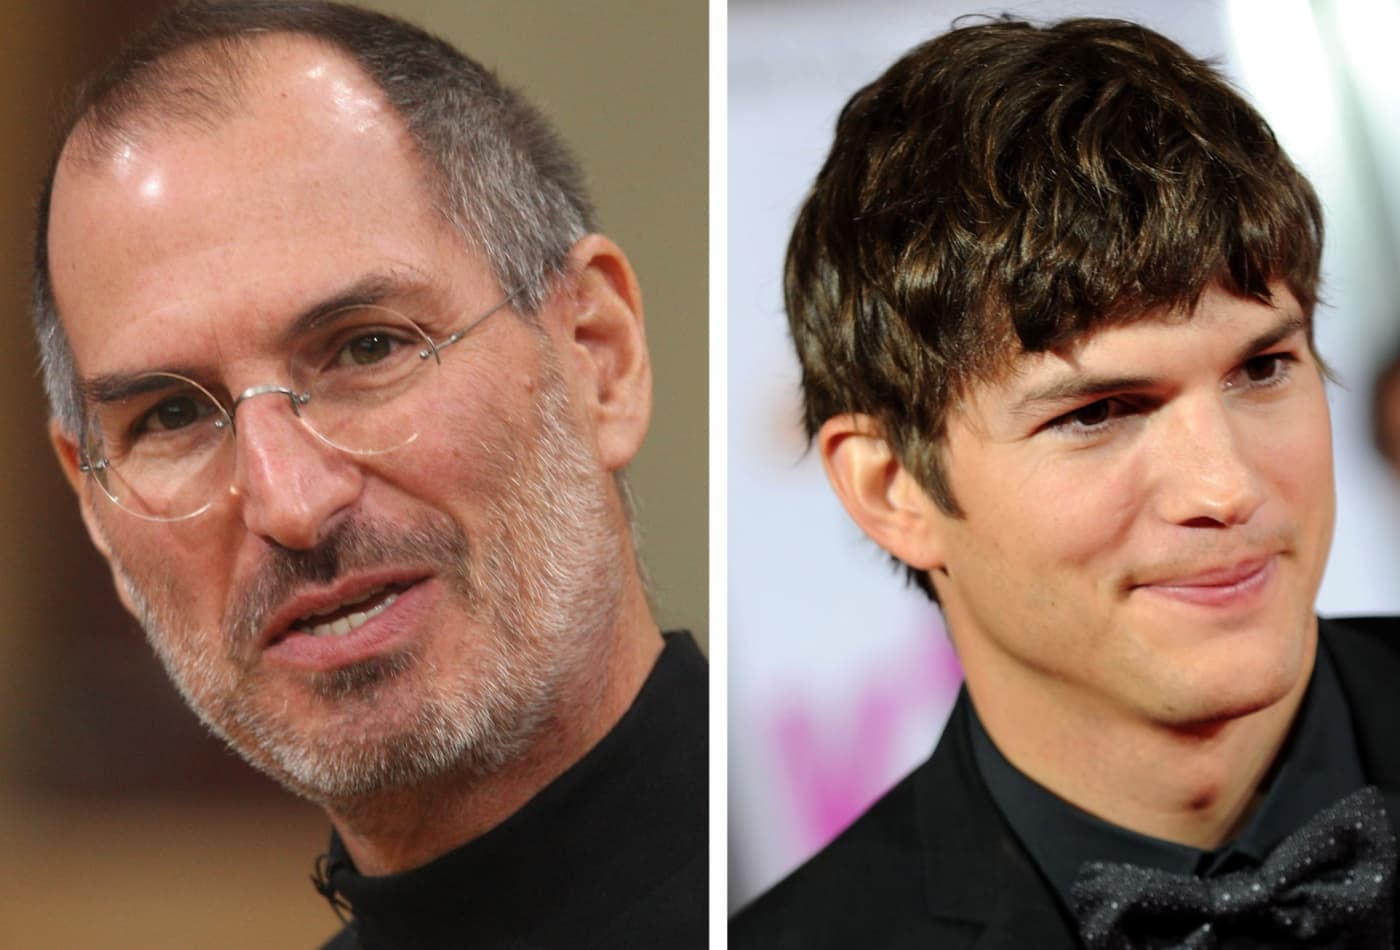 Ashton Kutcher says trying Steve Jobs' fruit diet lead to health issue